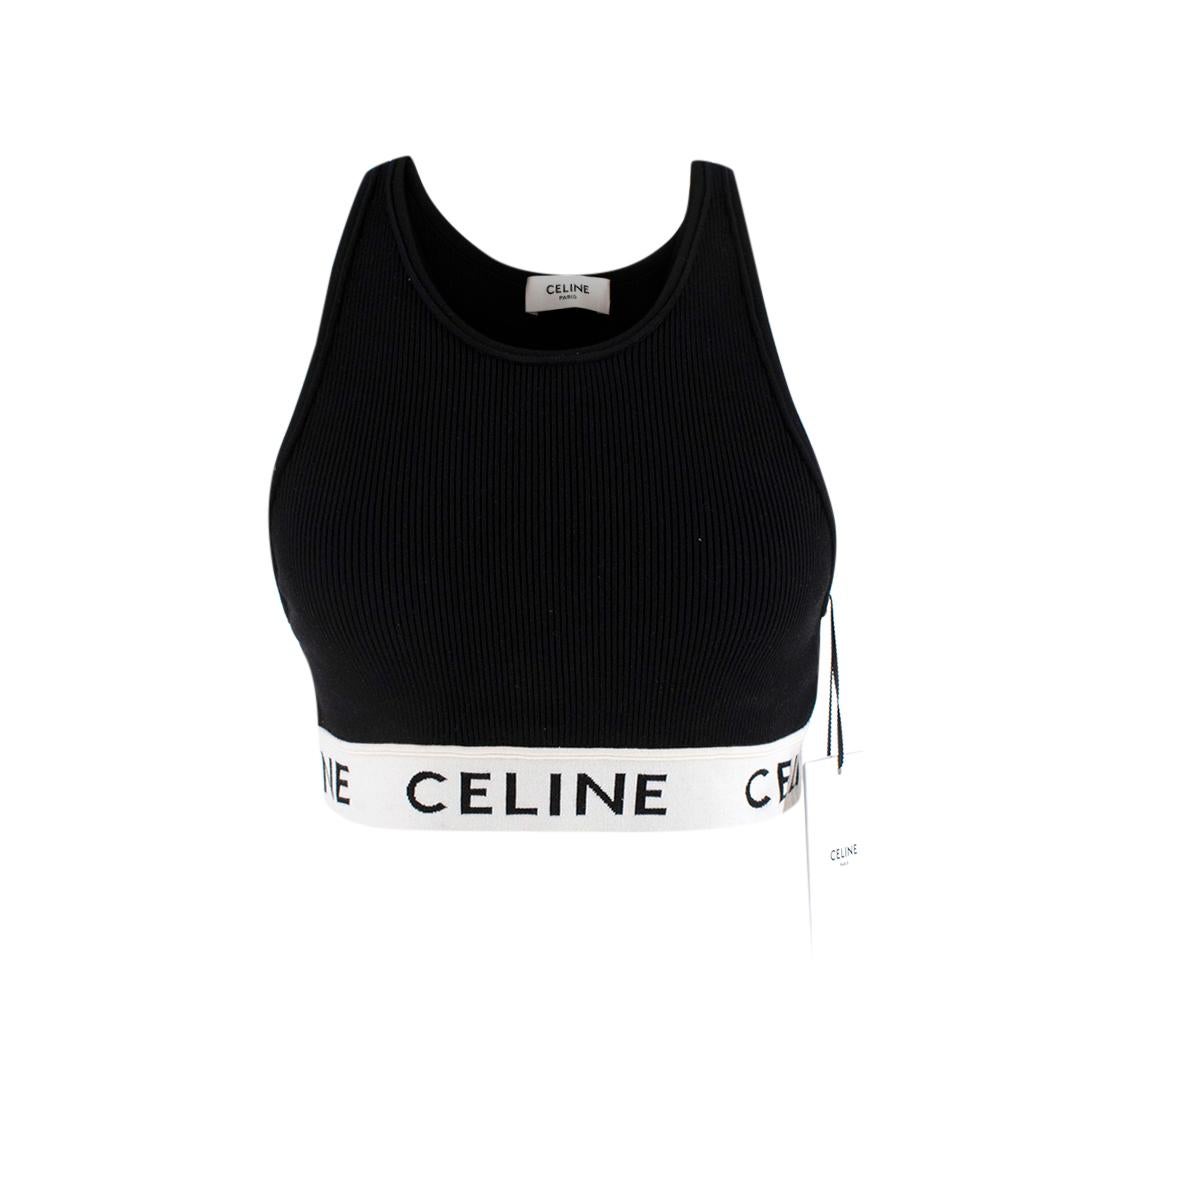 Celine Athletic Cotton Knit Black Sports Bra - Size M Sold Out - Us size 8 For Sale 1